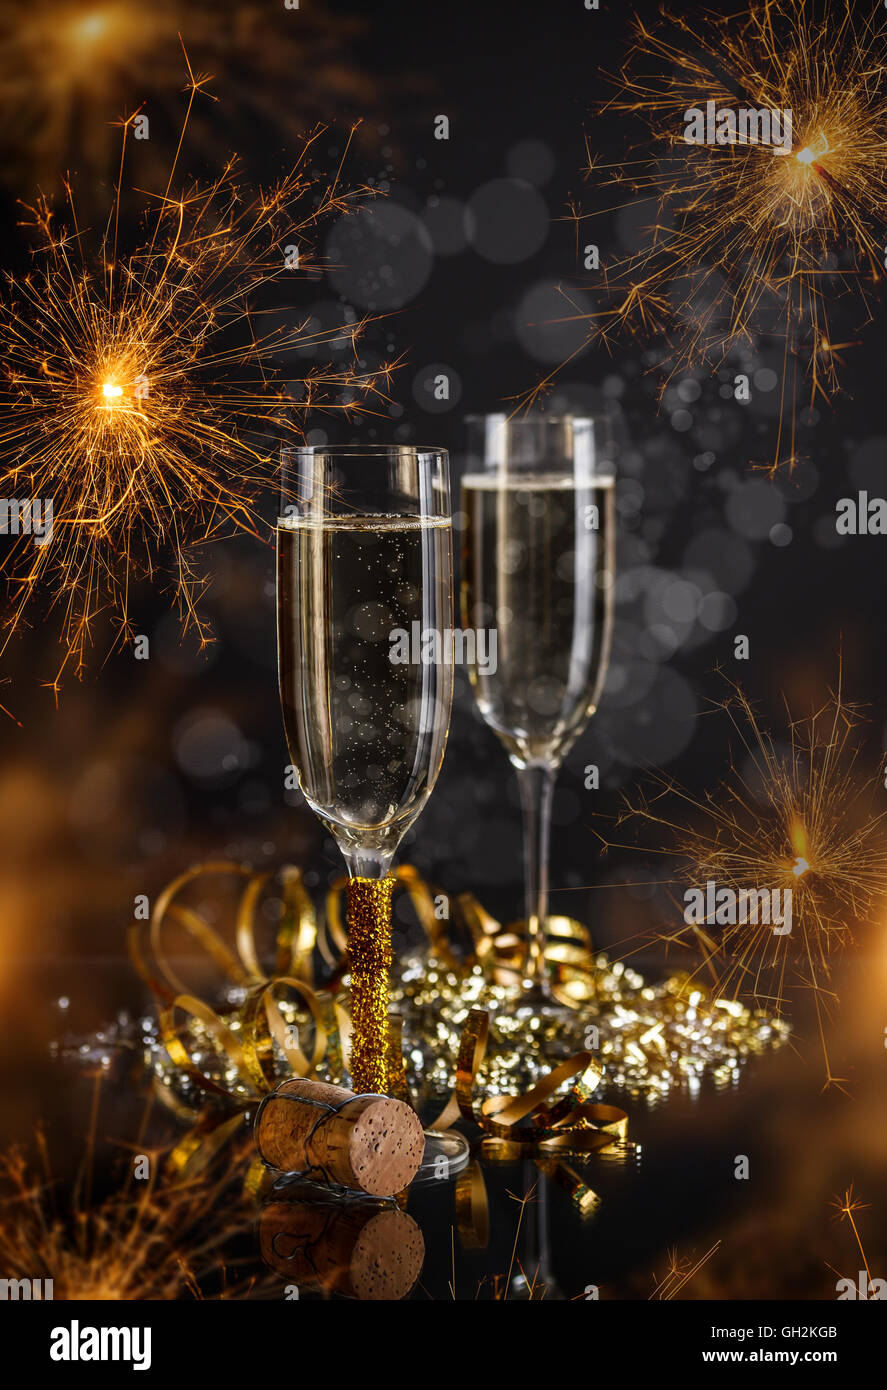 Champagne glasses on festive sparkler background Stock Photo